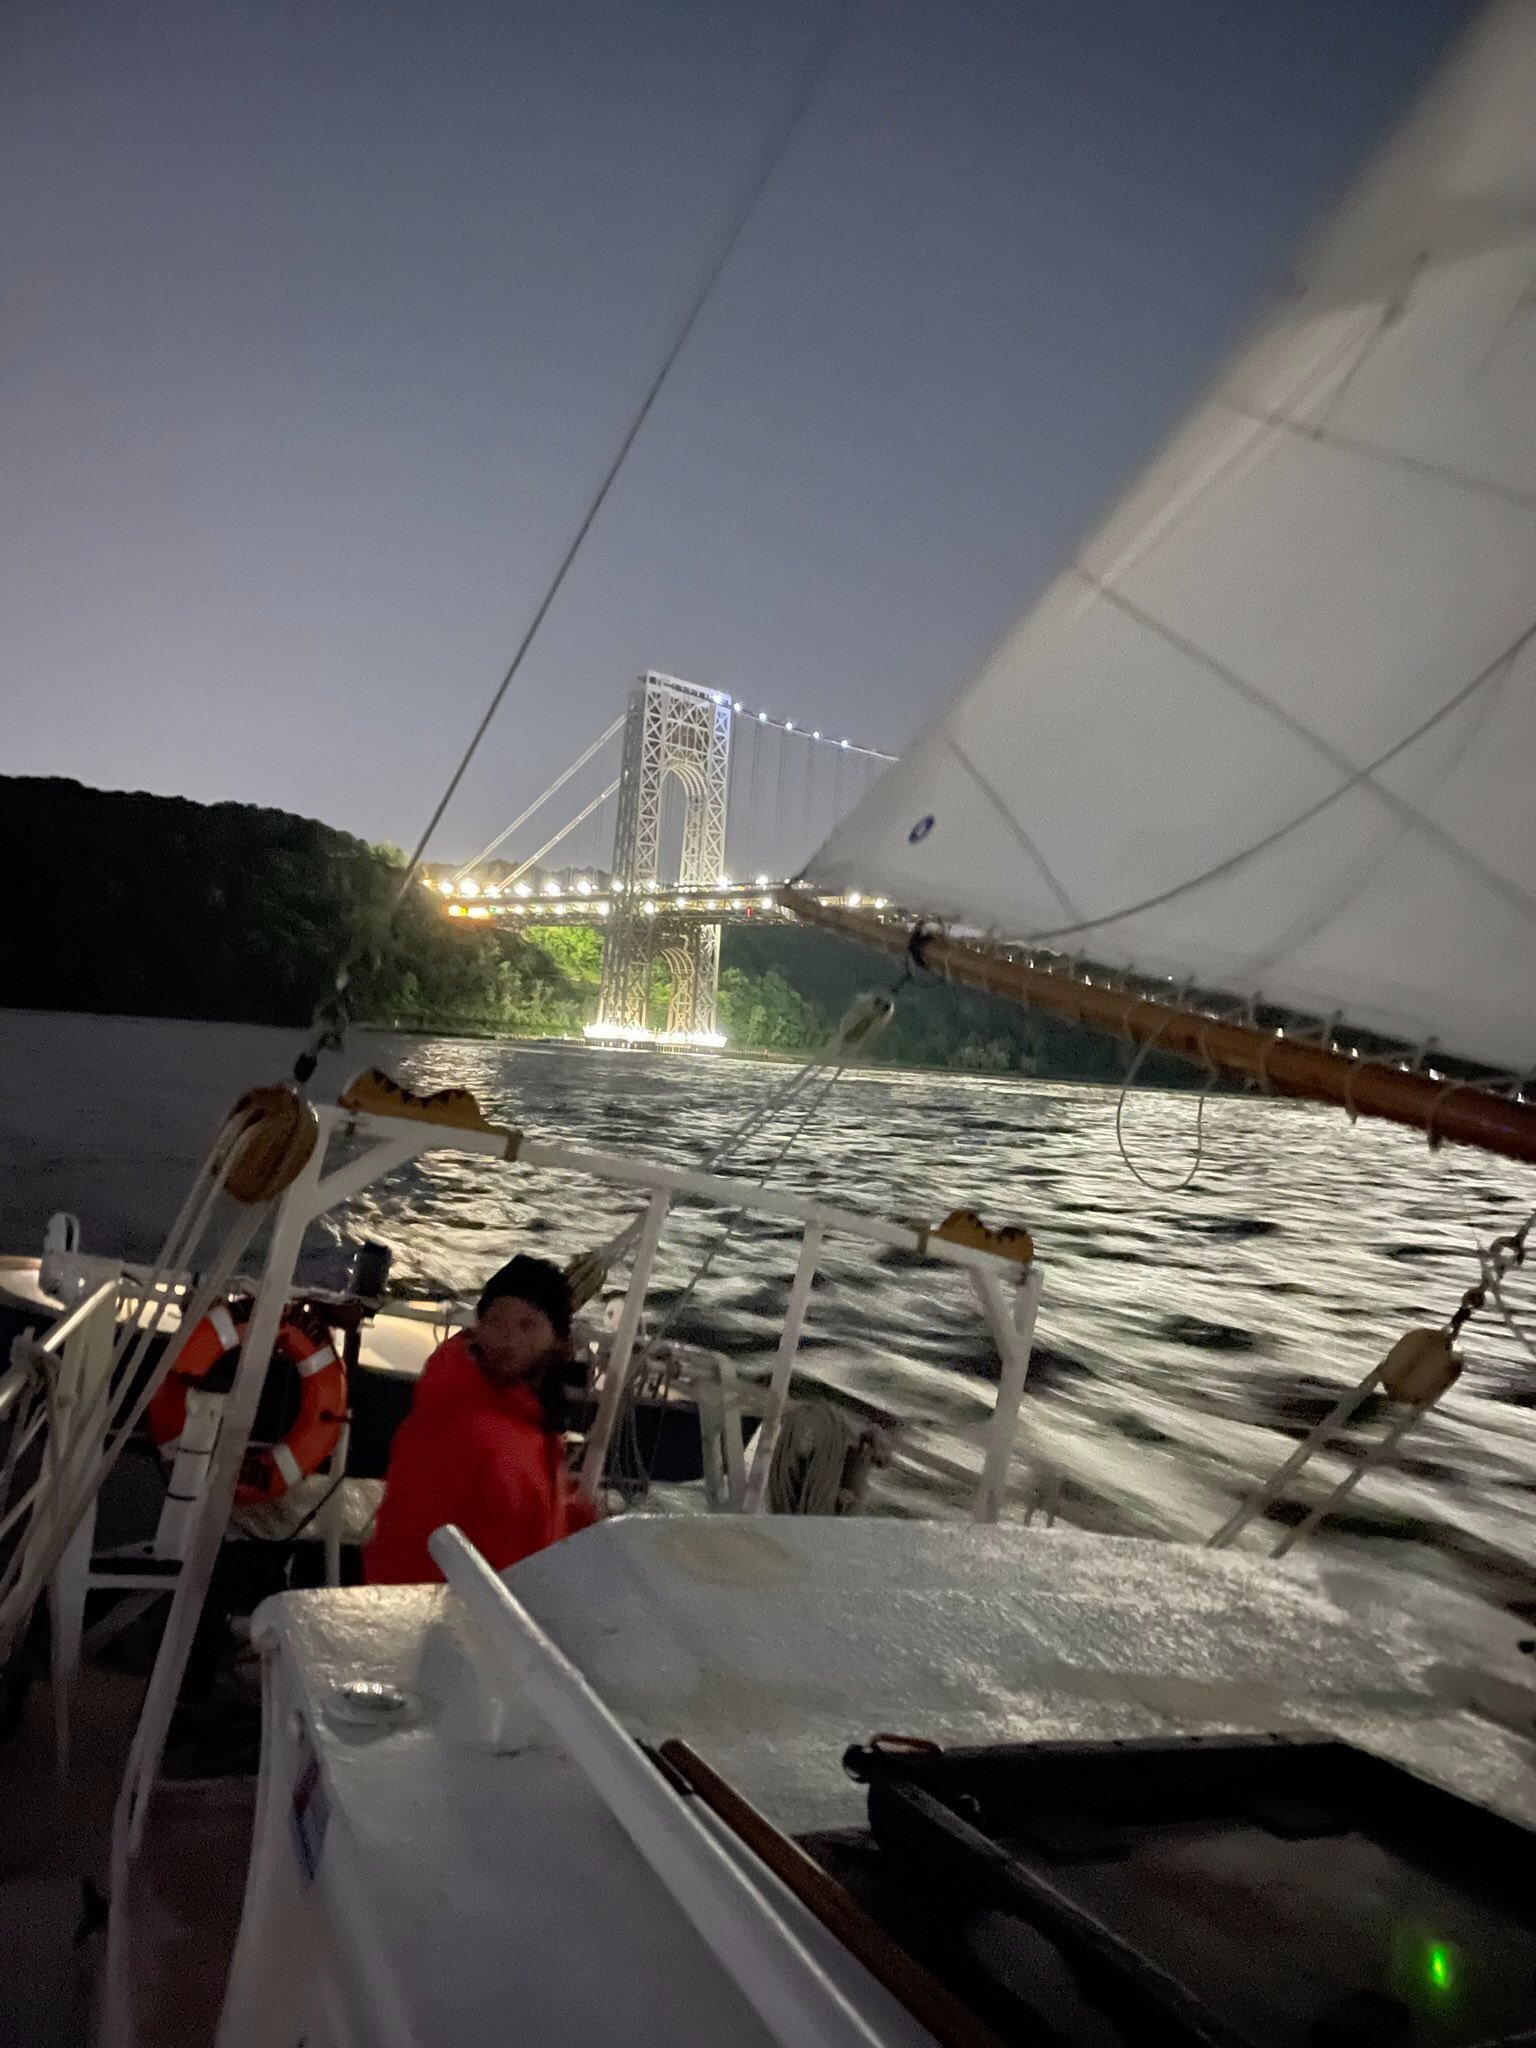  Night sailing near the George Washington Bridge 